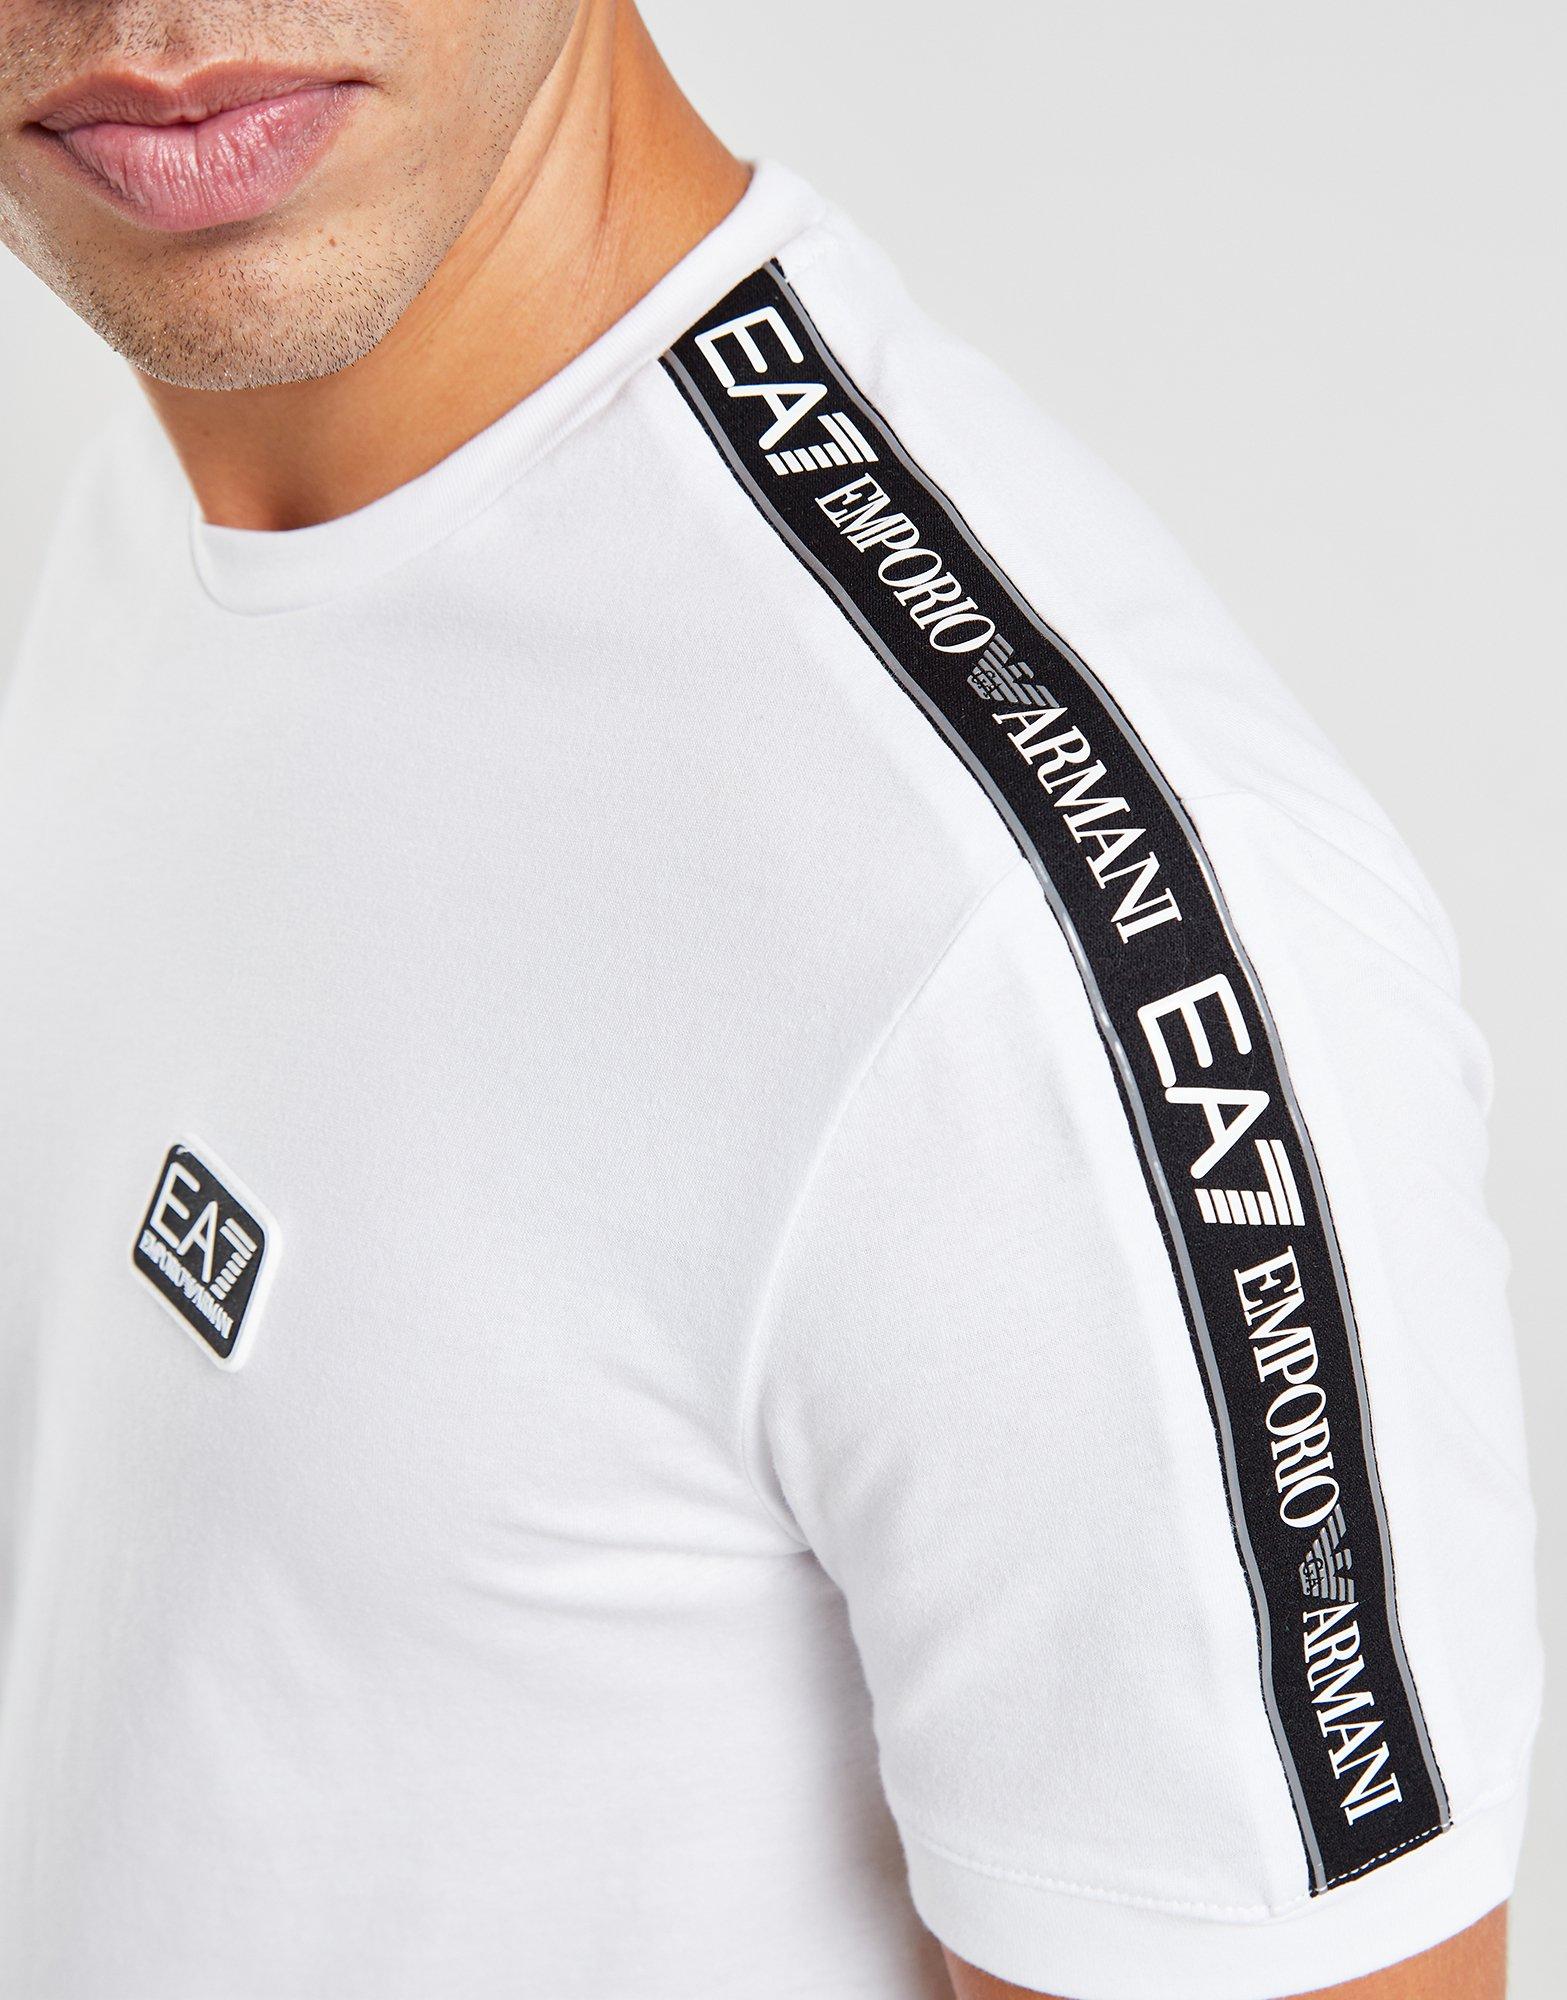 Emporio Armani EA7 Tape Badge T-Shirt JD Sports Global